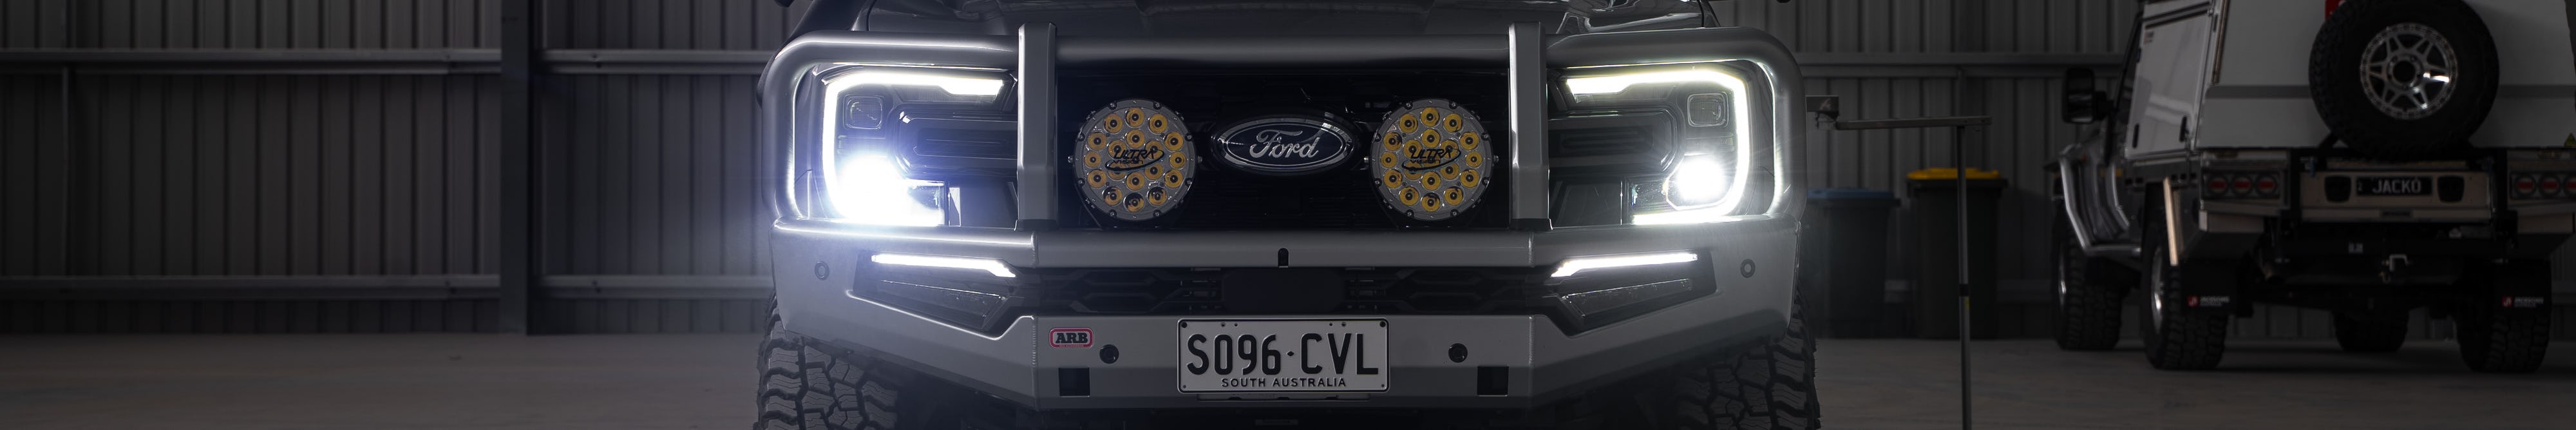 Ford Ranger Next-Gen 4x4 with ARB bullbar & Ultravision Lights